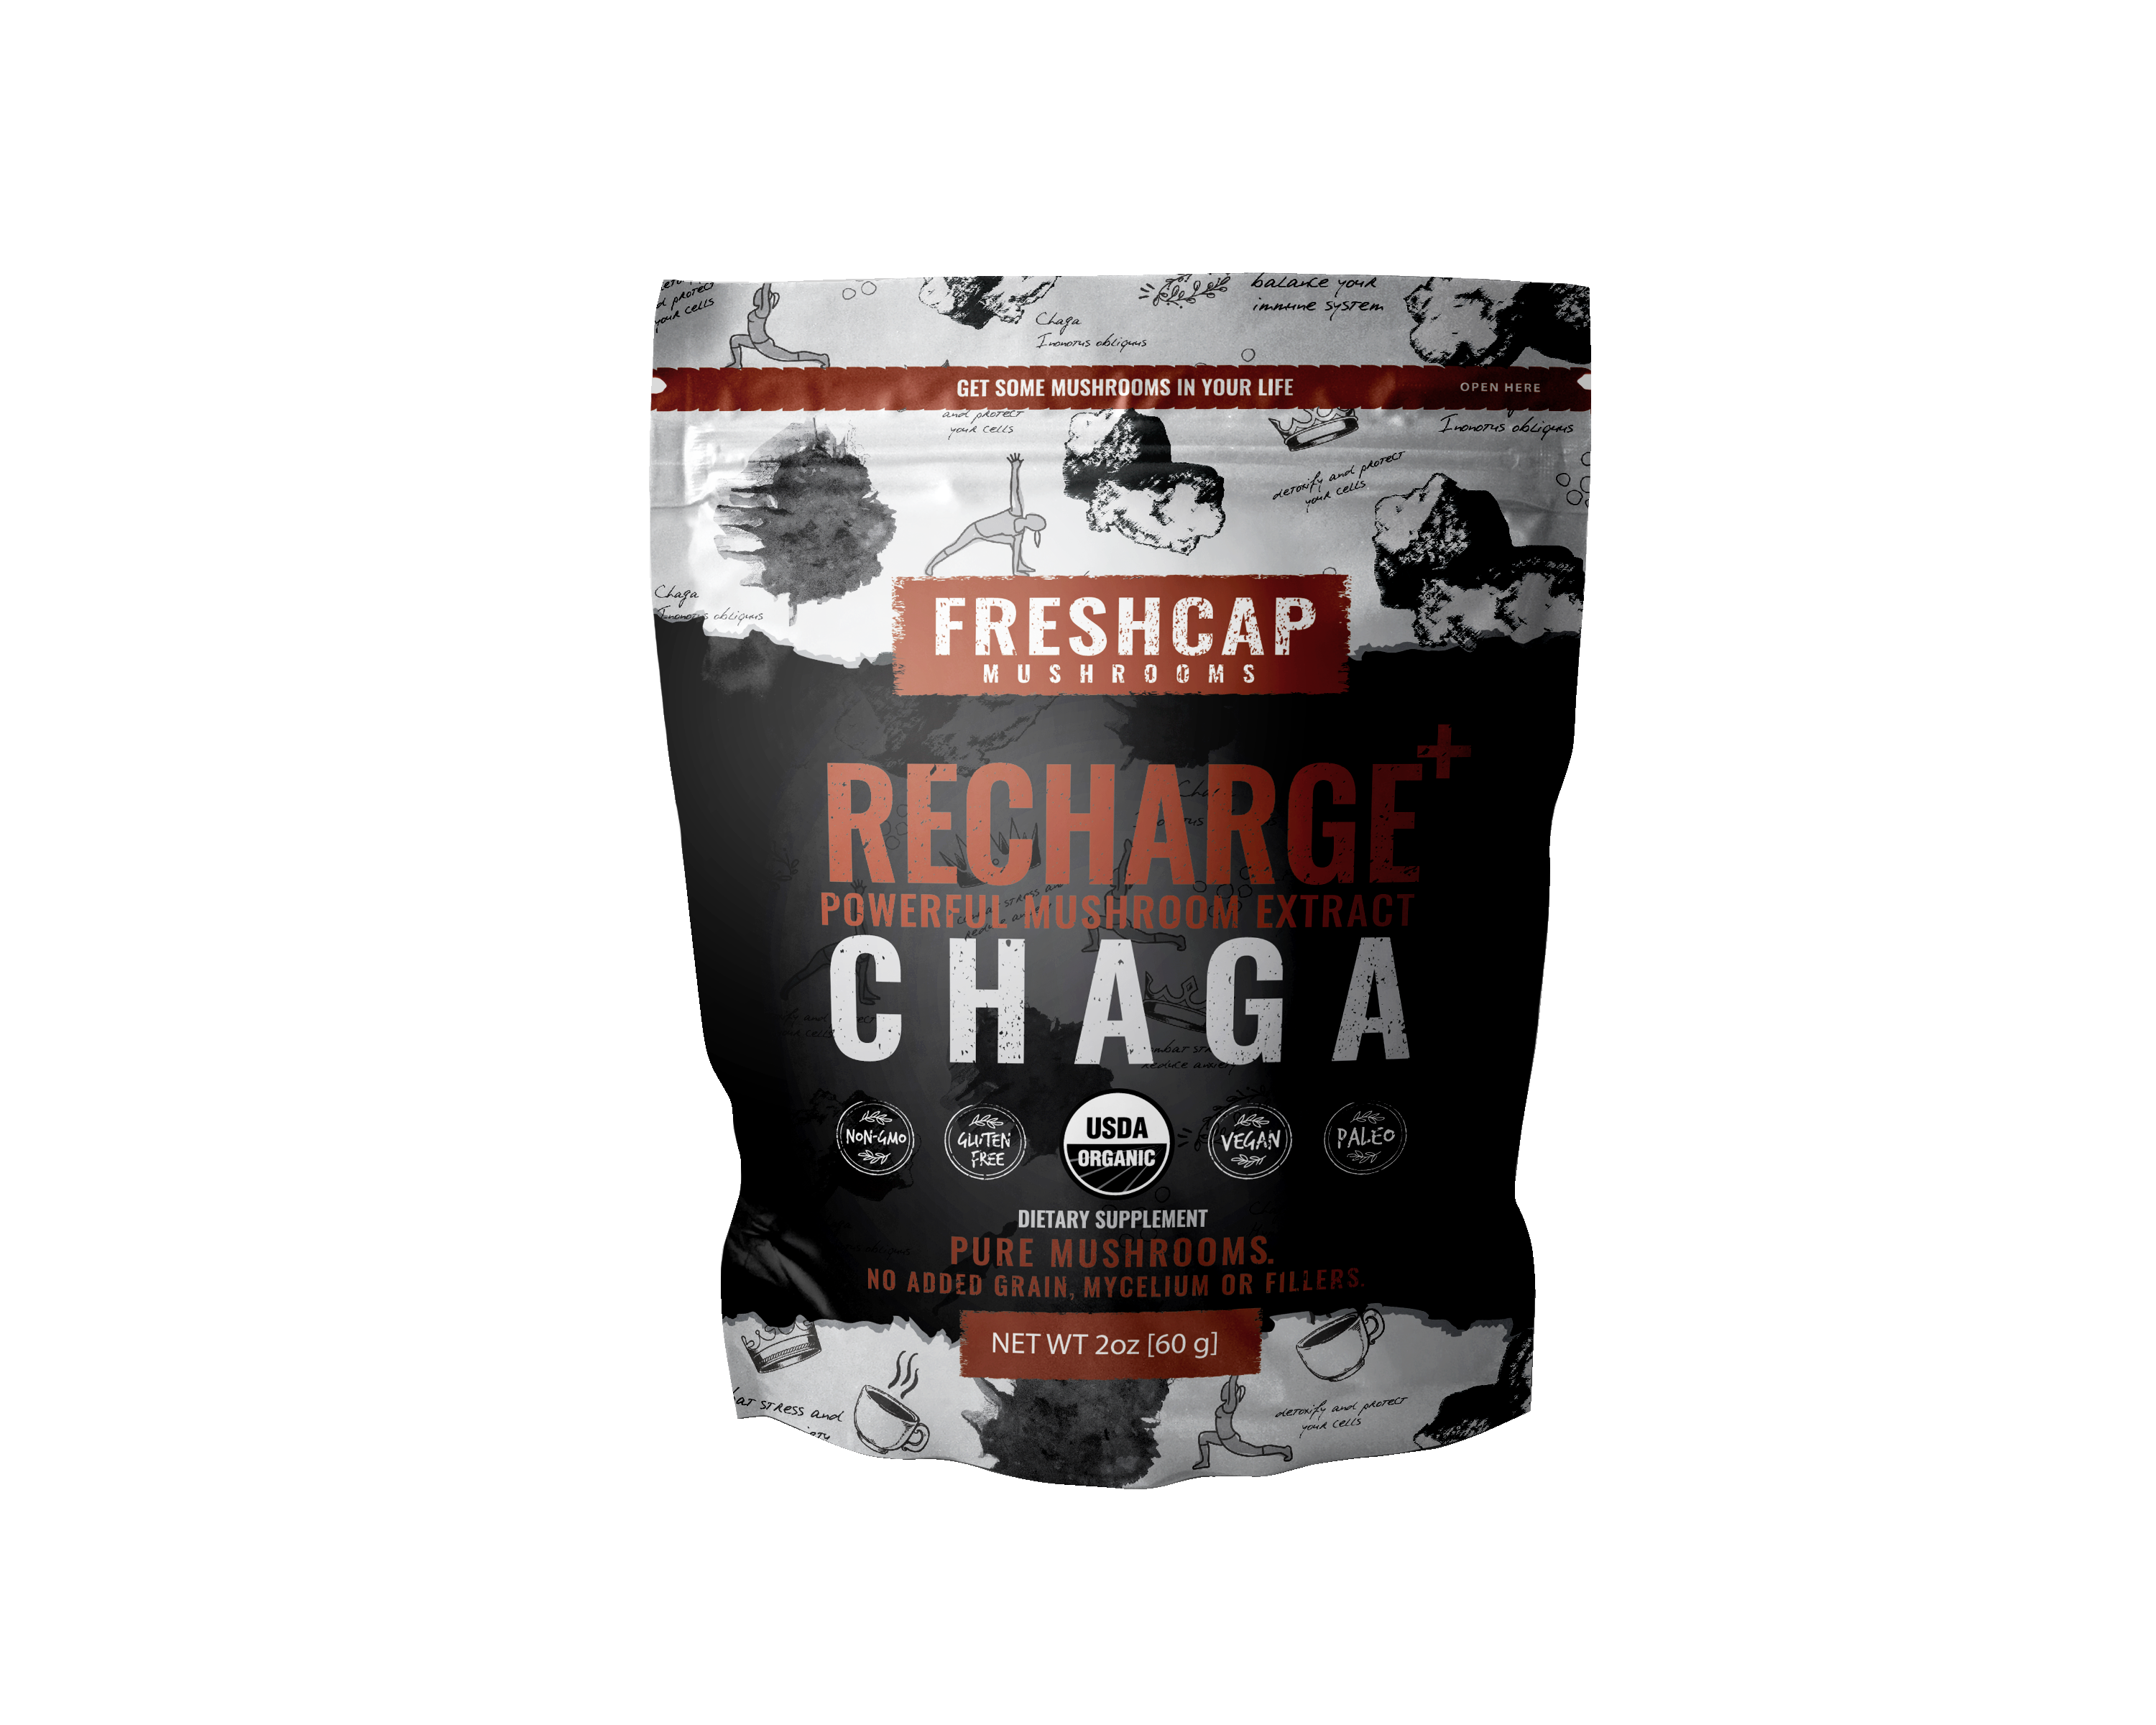 RECHARGE Chaga Powerful Mushroom Extract